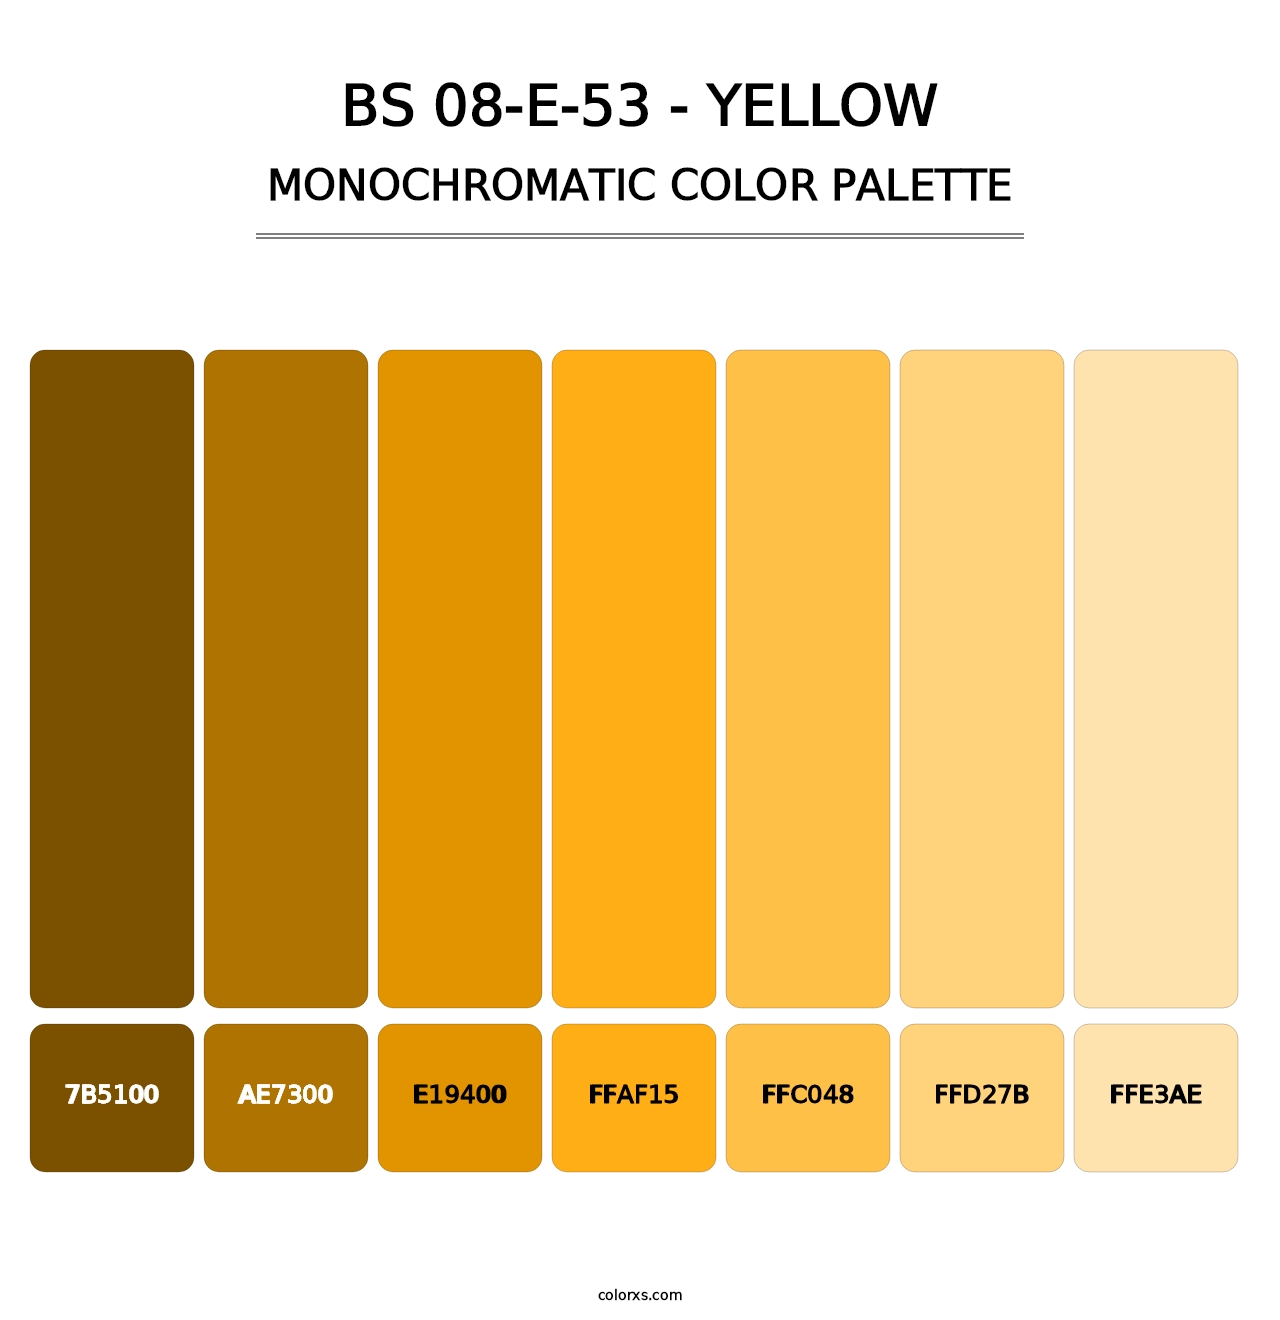 BS 08-E-53 - Yellow - Monochromatic Color Palette